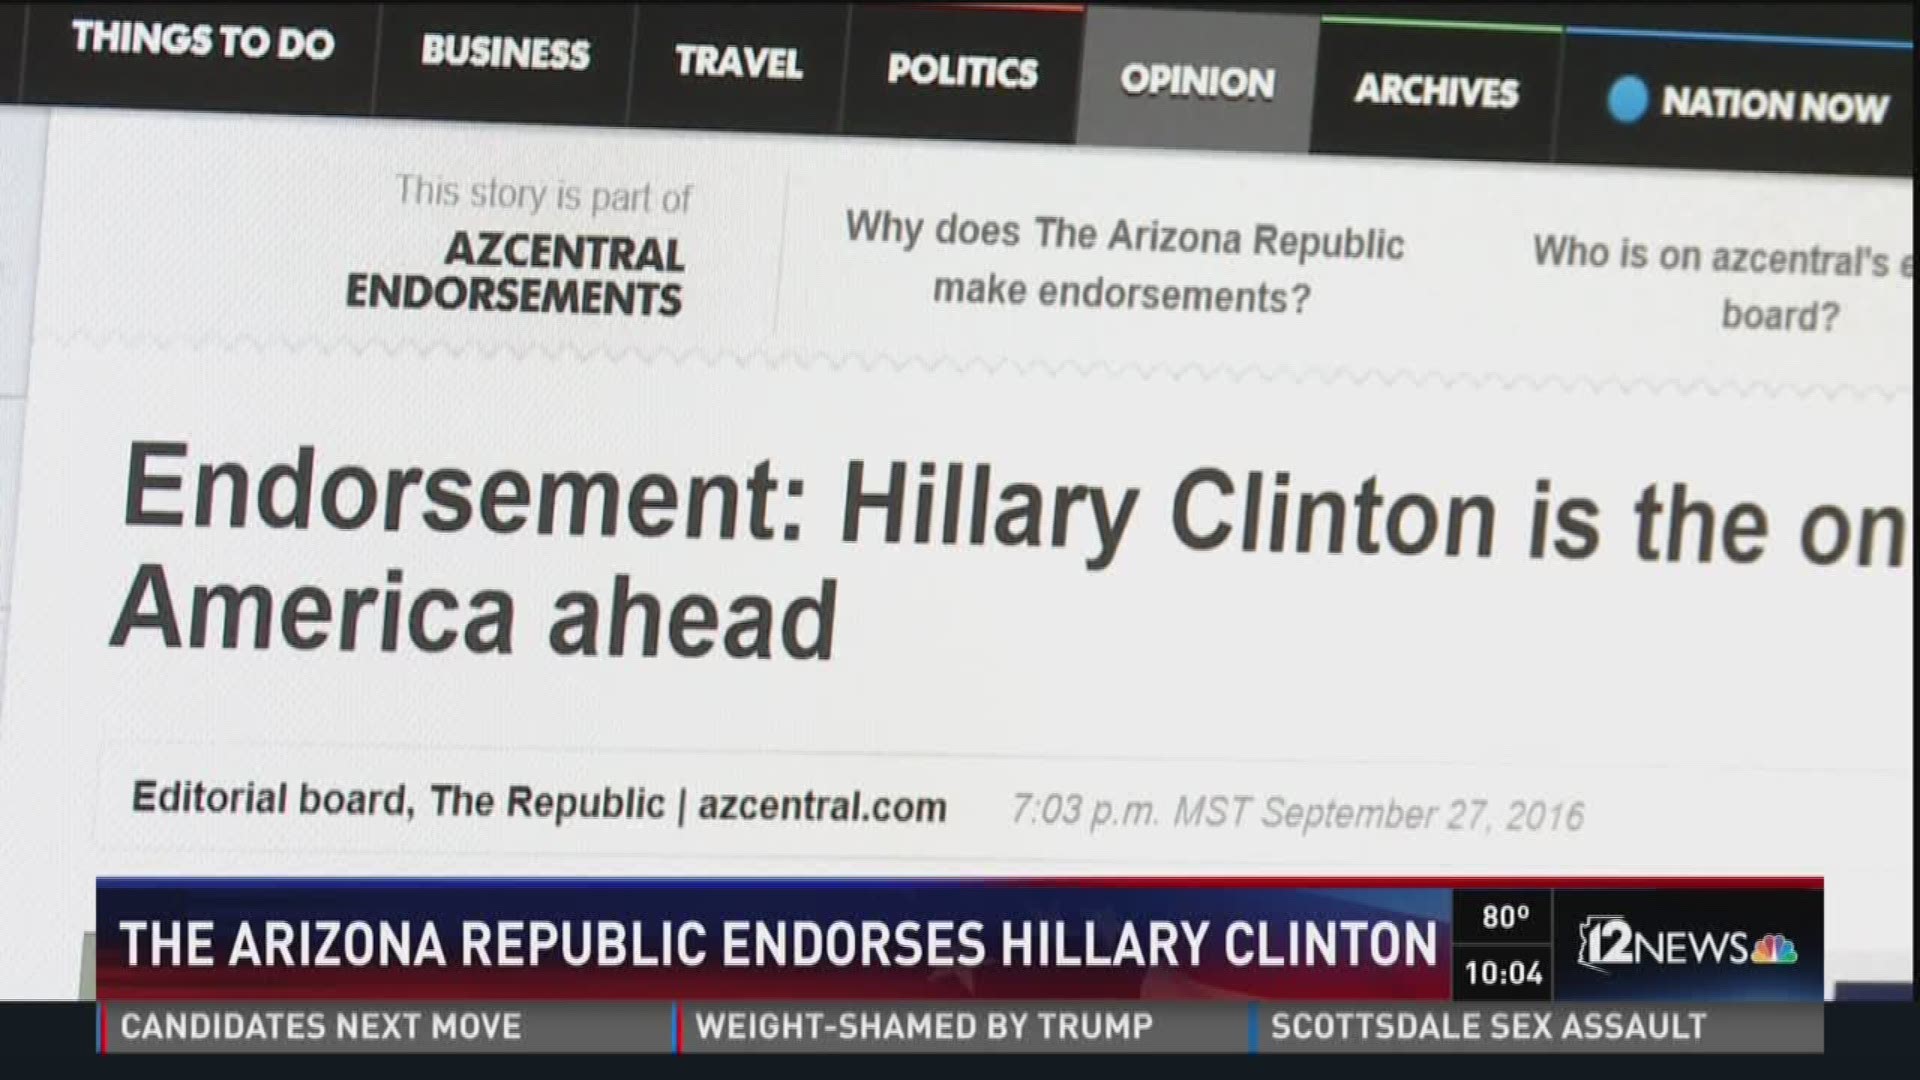 The Arizona republic endorses Hillary Clinton.